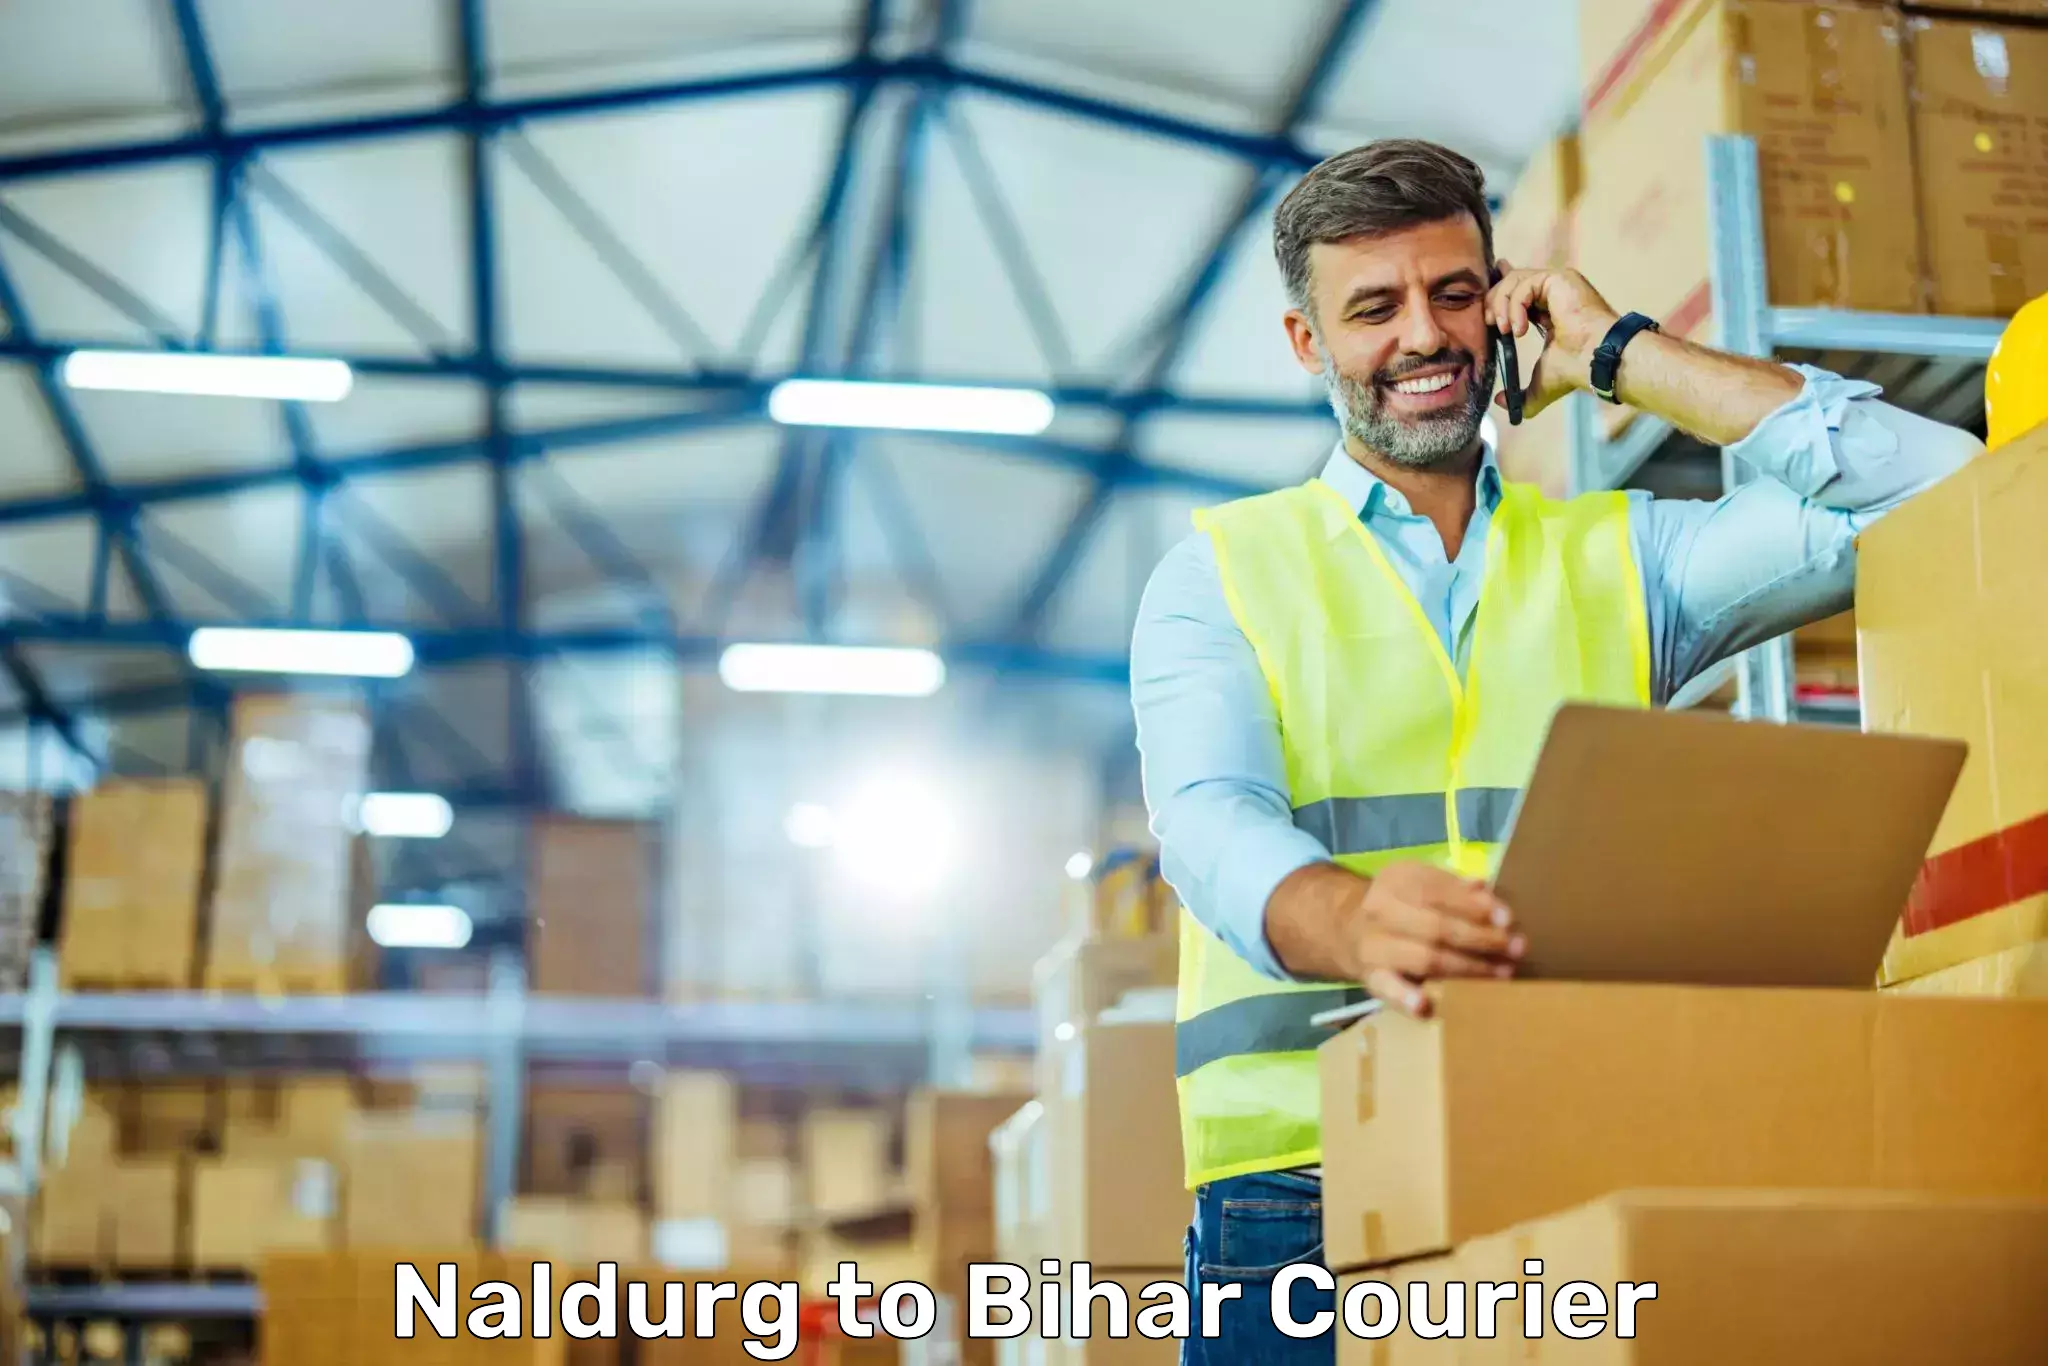 Courier service innovation Naldurg to Darbhanga